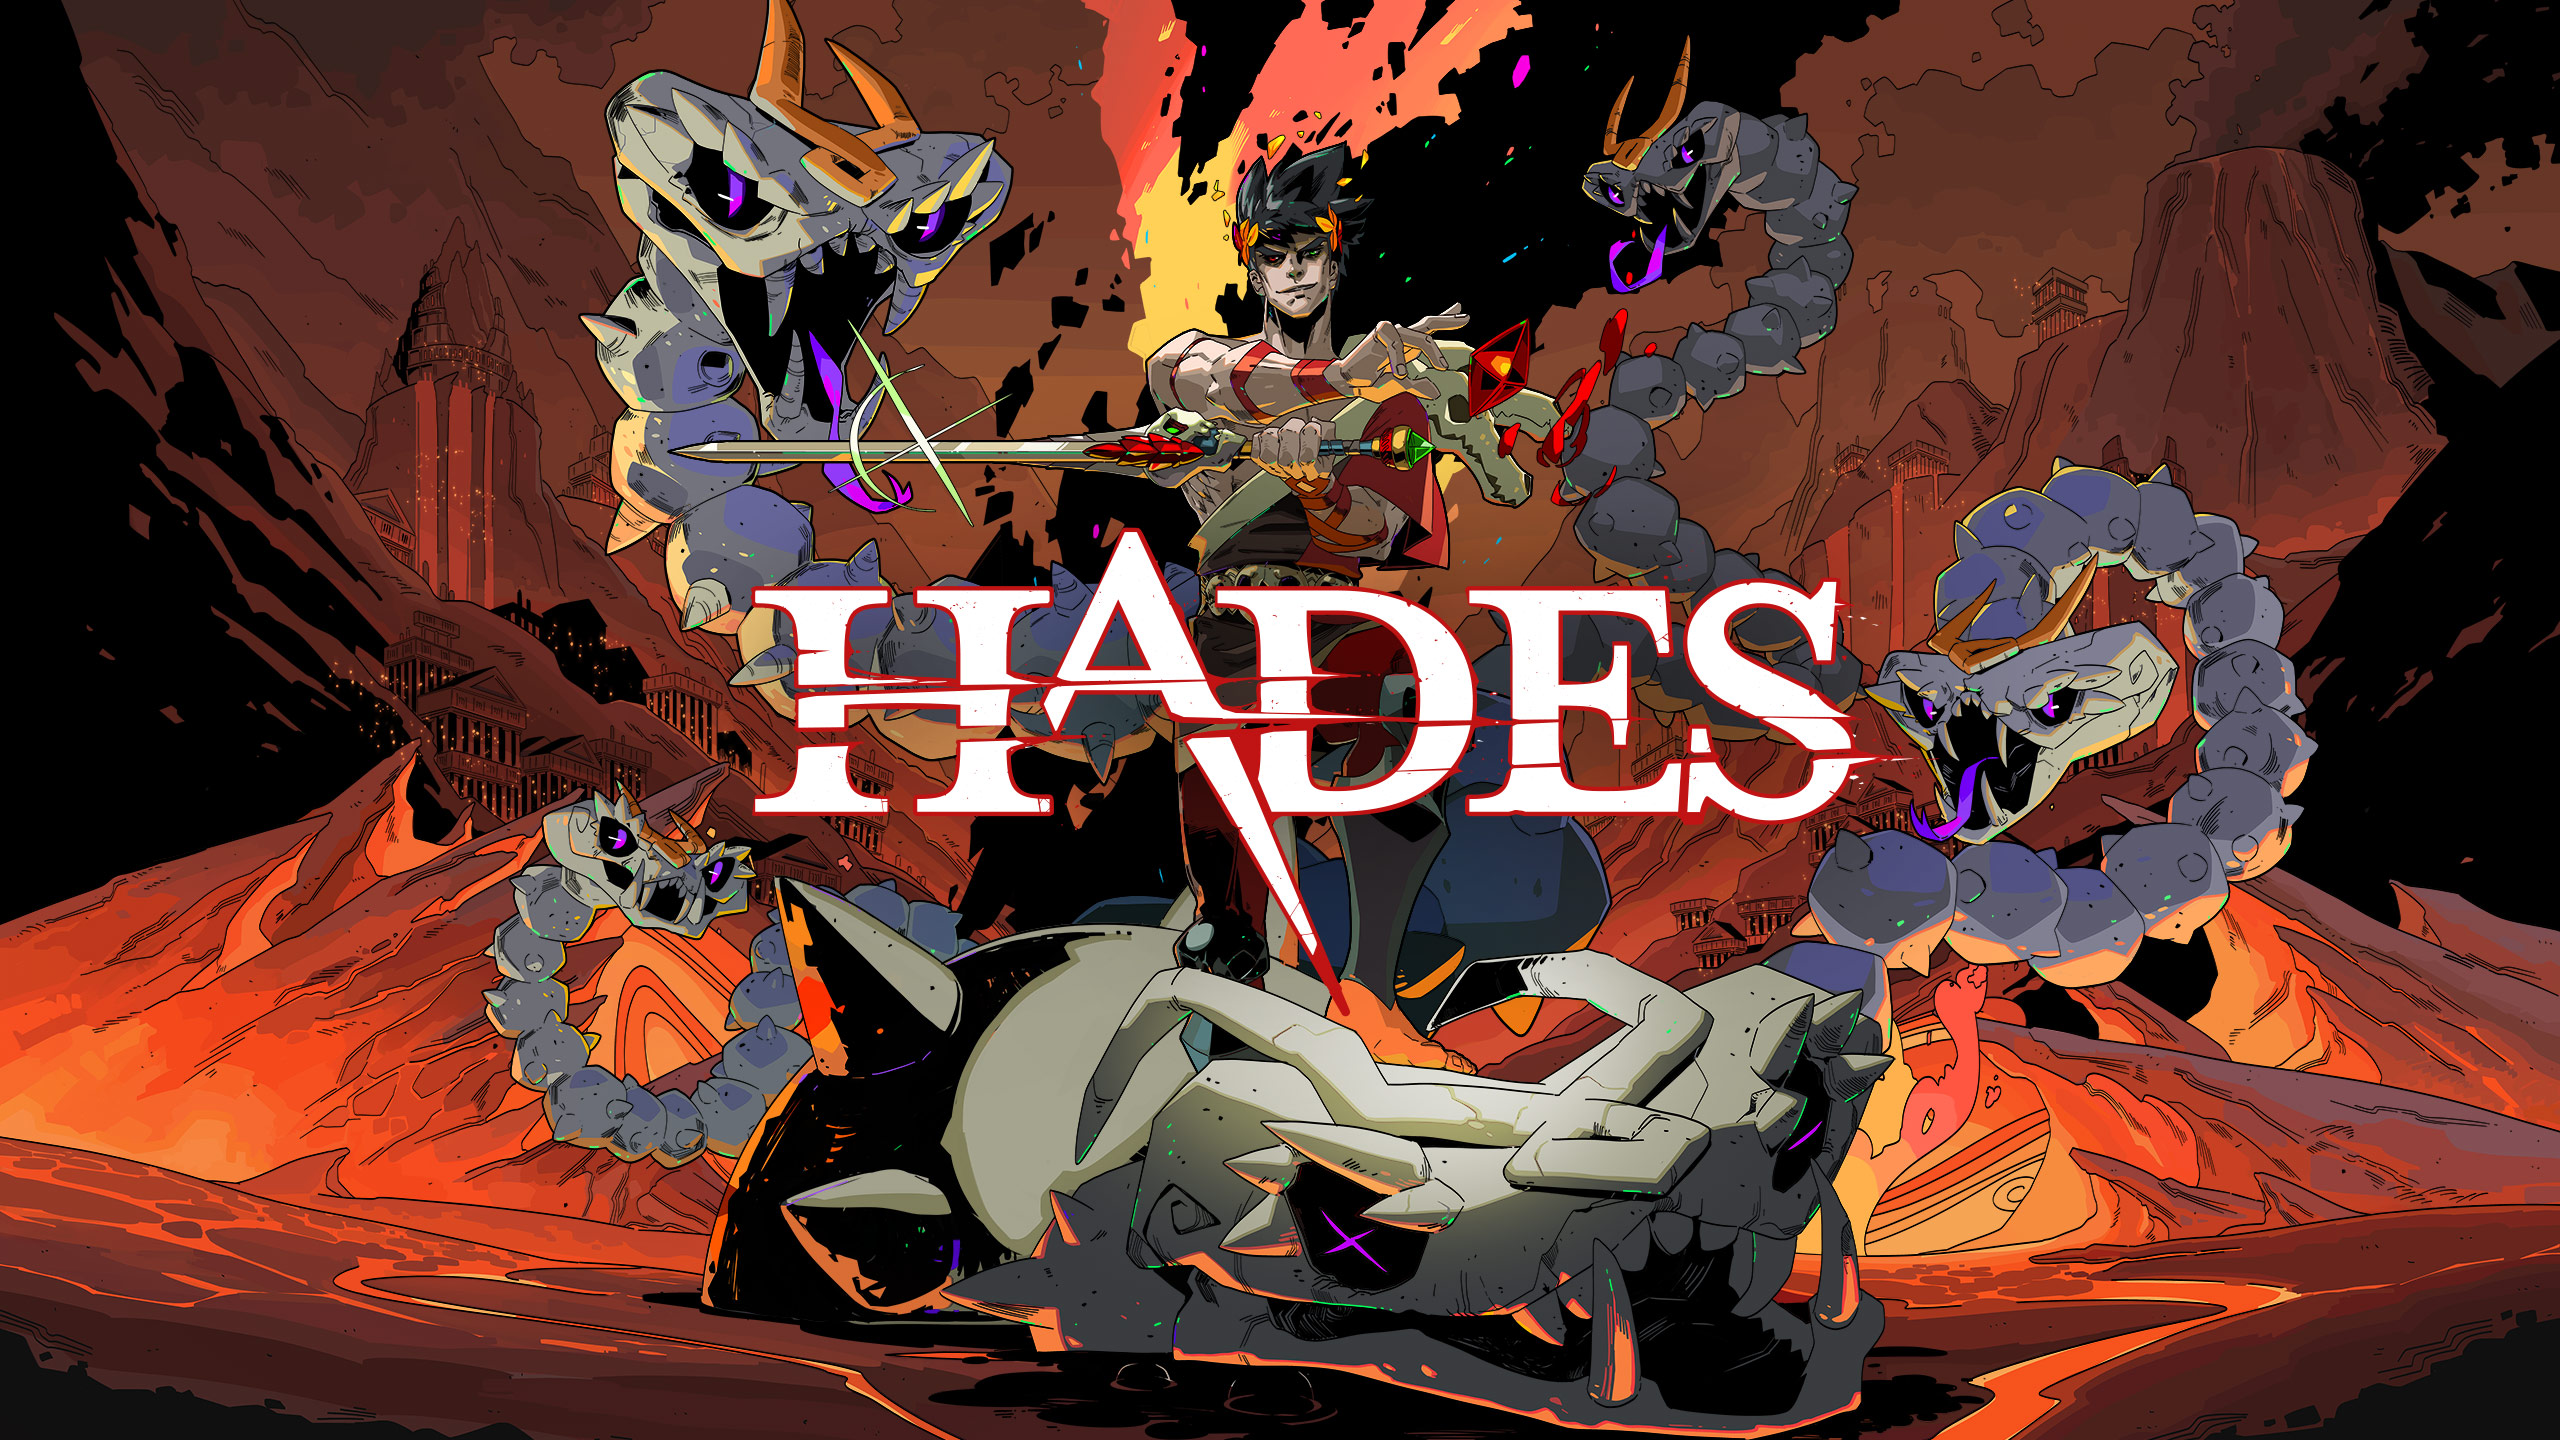 Review  Hades - Rainbow Road